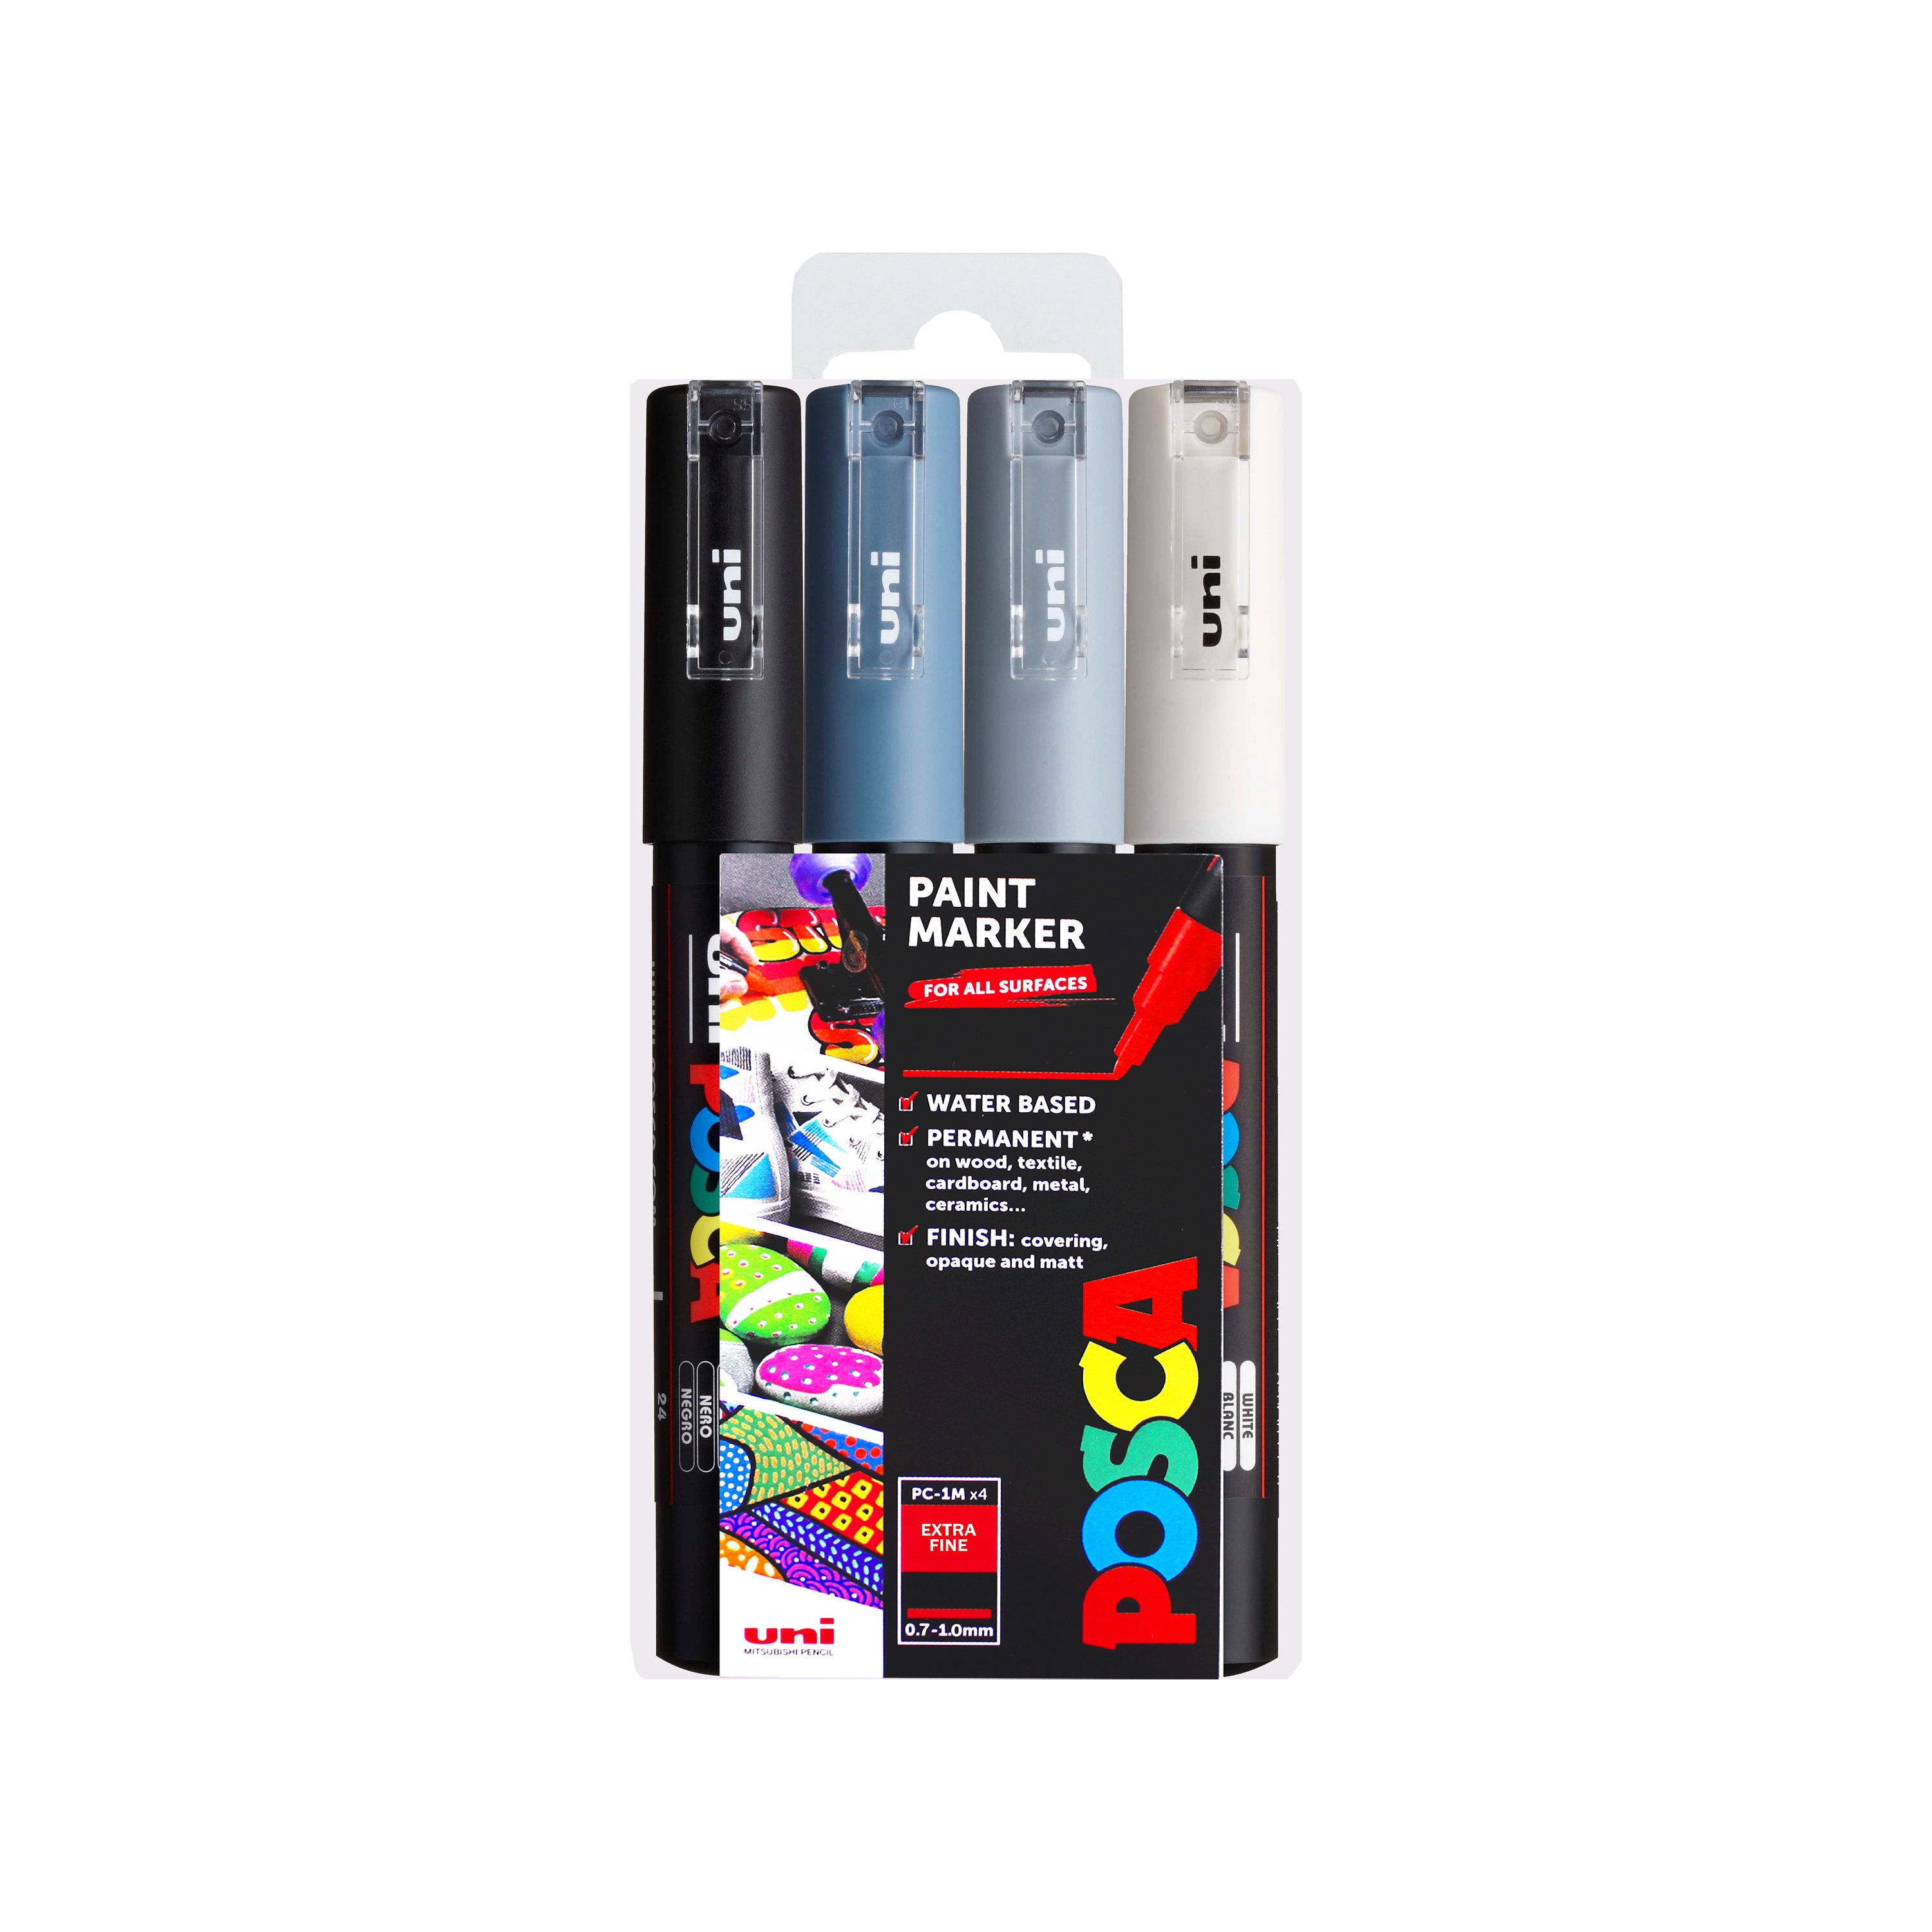 1x Edding 780 Paint Marker Pen Glass Metal Plastic Bullet Tip 0.8mm  Waterproof 